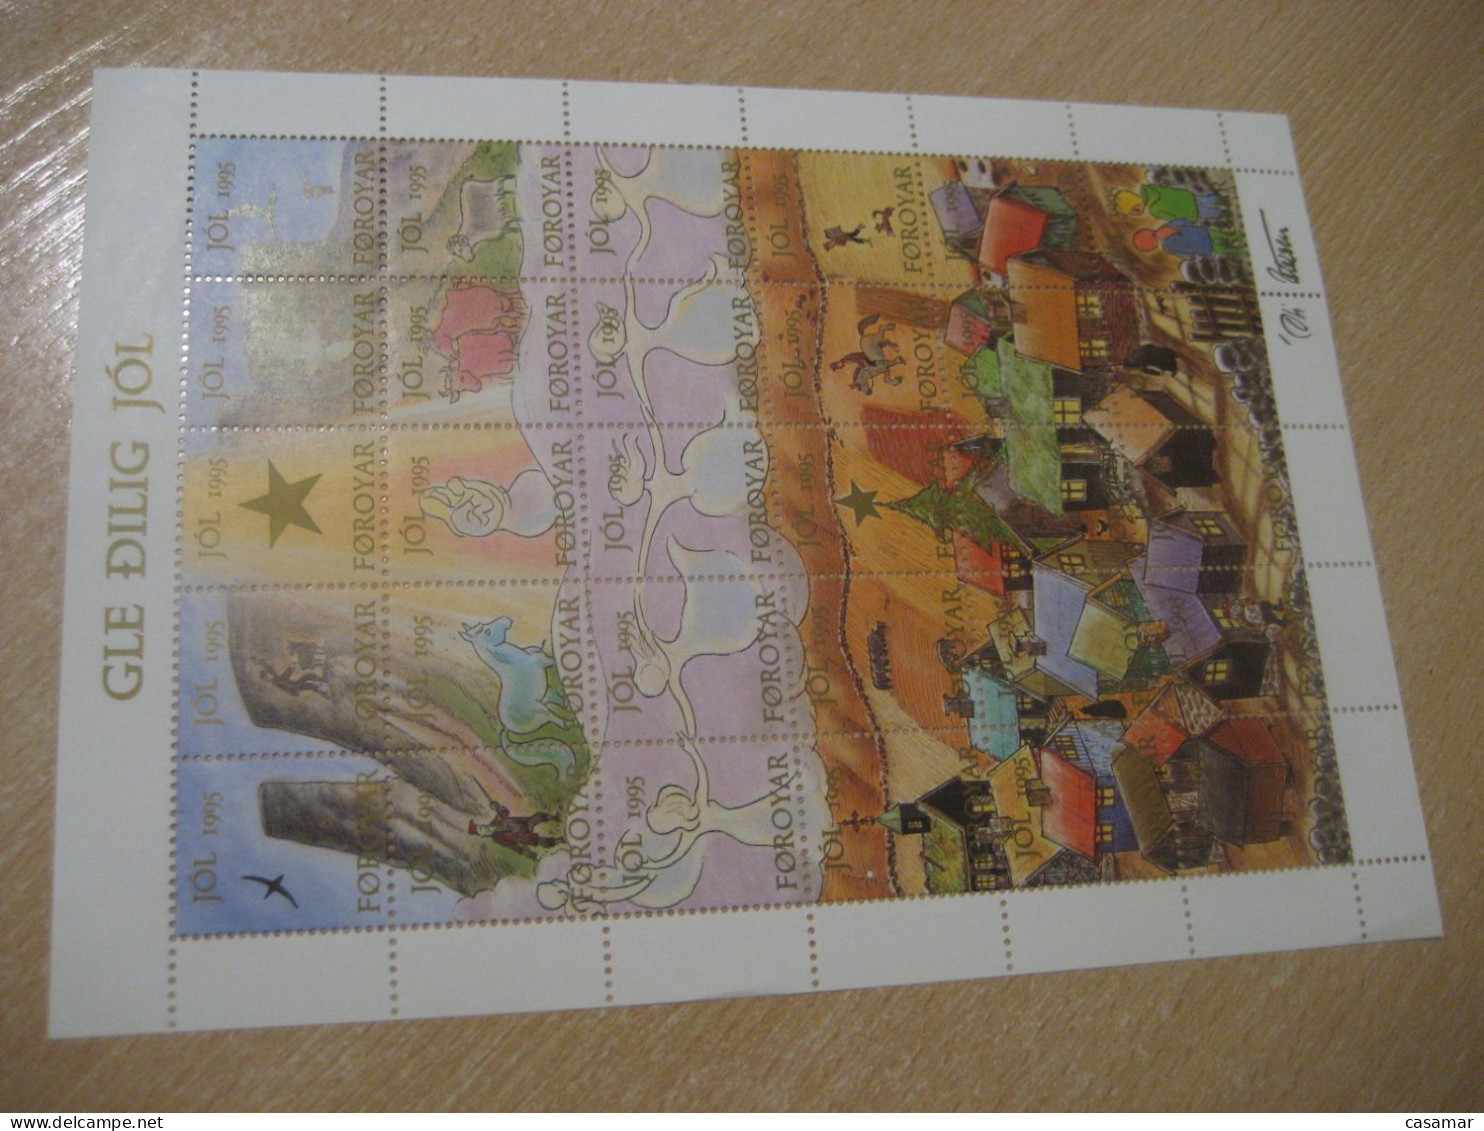 FAROE ISLANDS 1995 Horse Cow Sheep Merry Christmas Sheet Bloc 30 Poster Stamp Vignette DENMARK Label - Faeroër